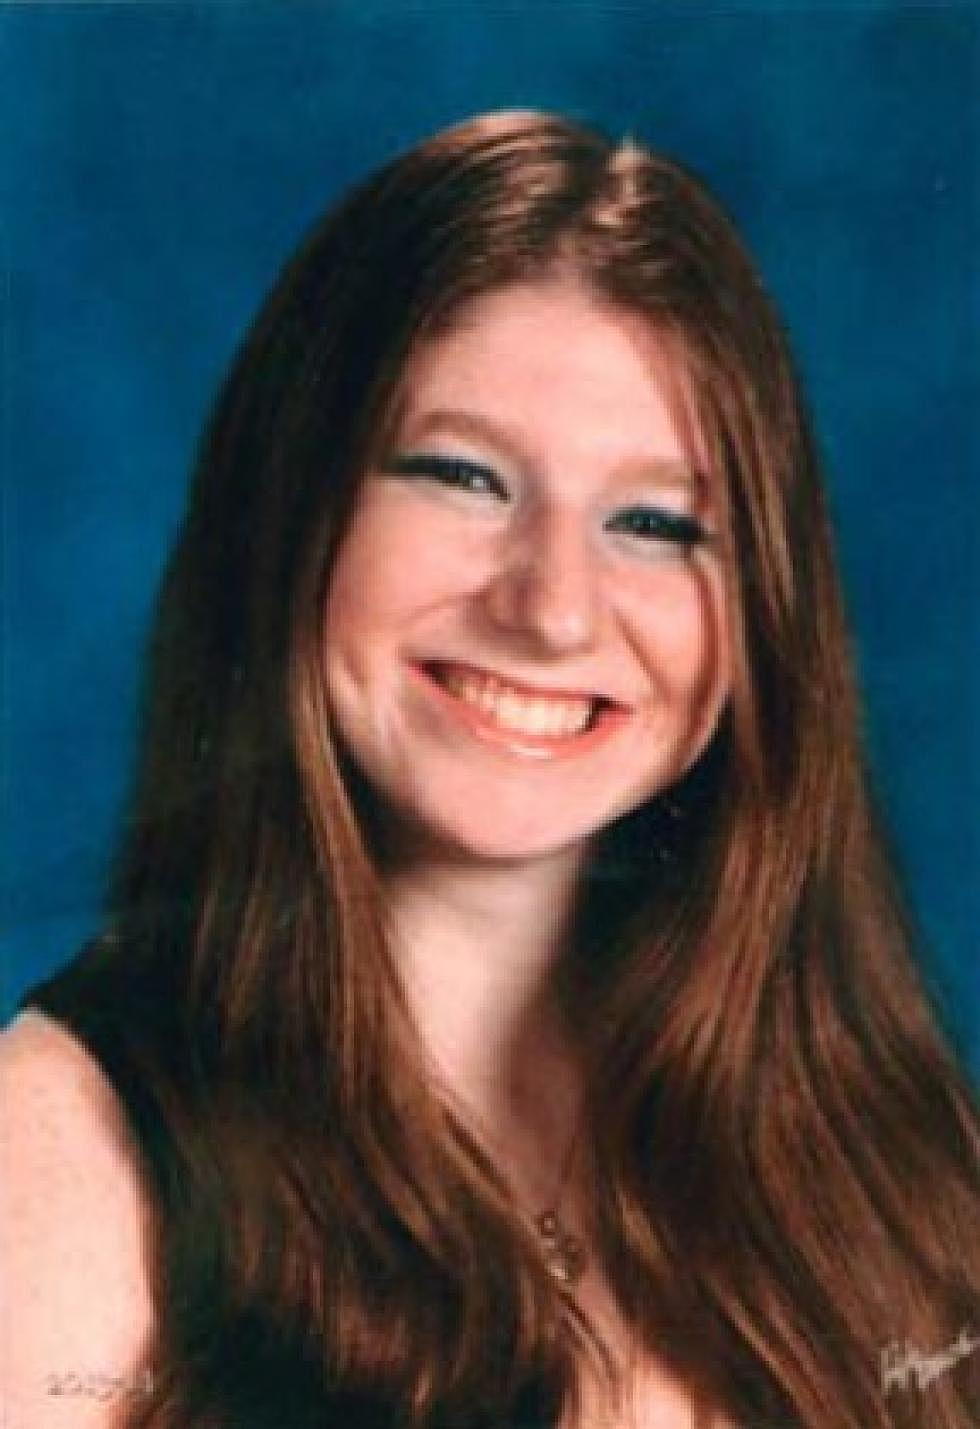 Missing – 16-Year-Old East Greenbush Girl